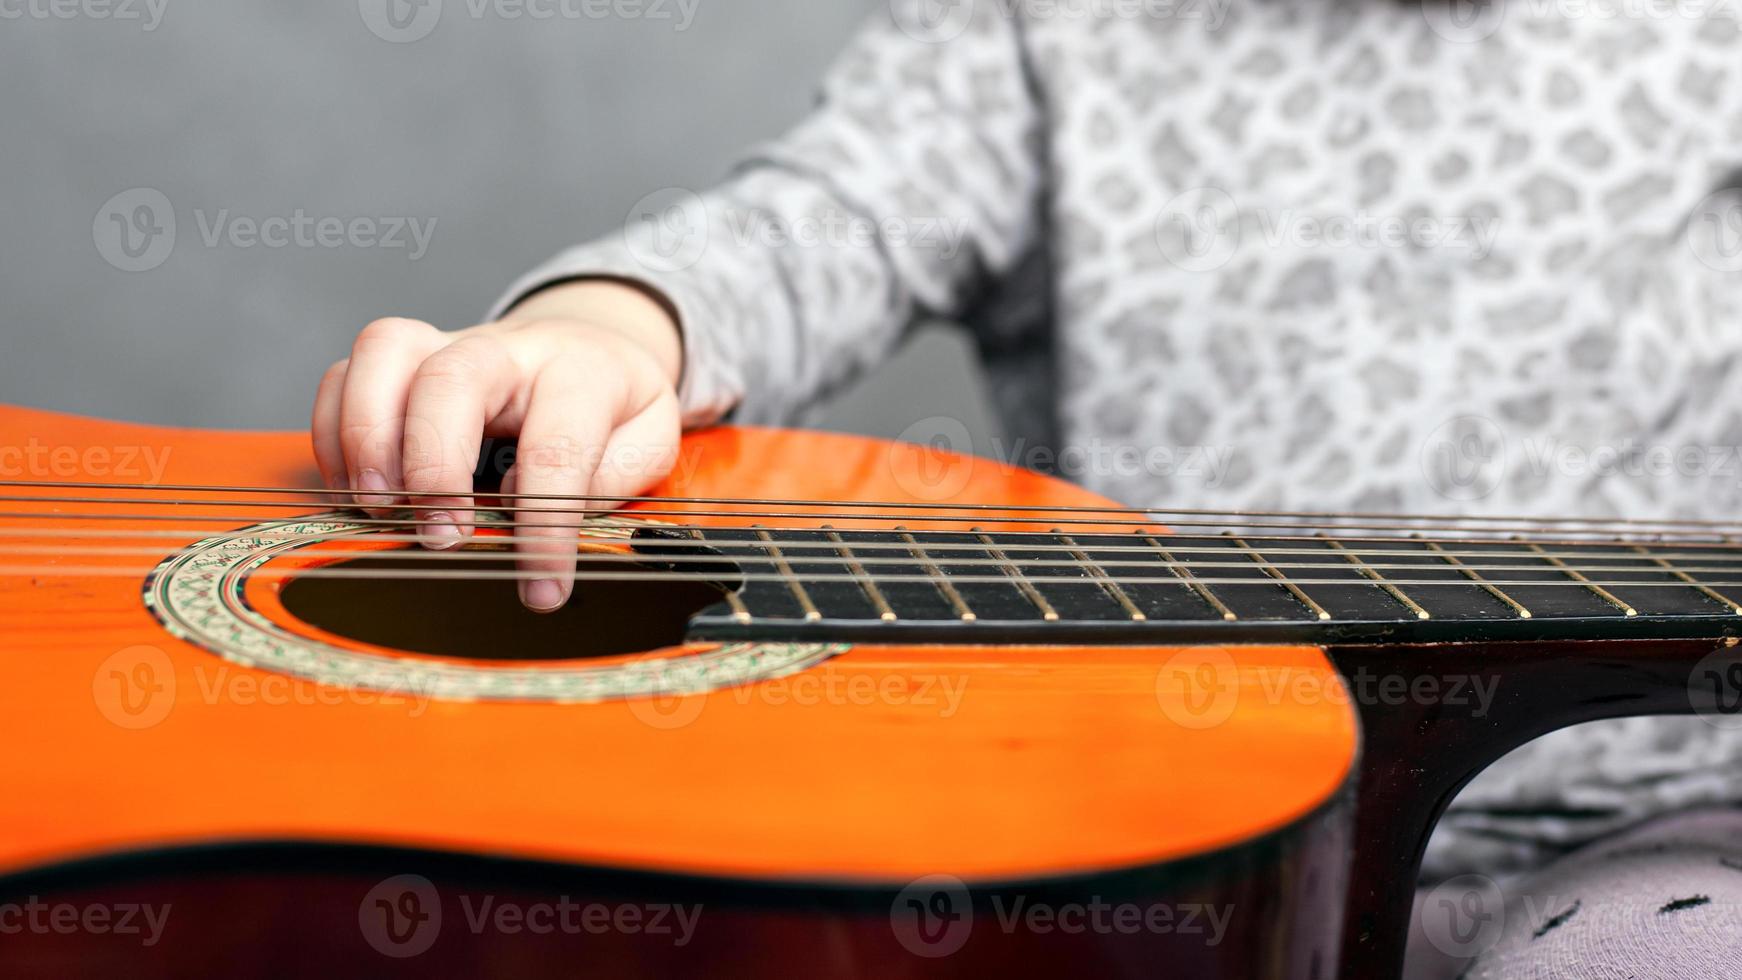 bambina e chitarra acustica foto